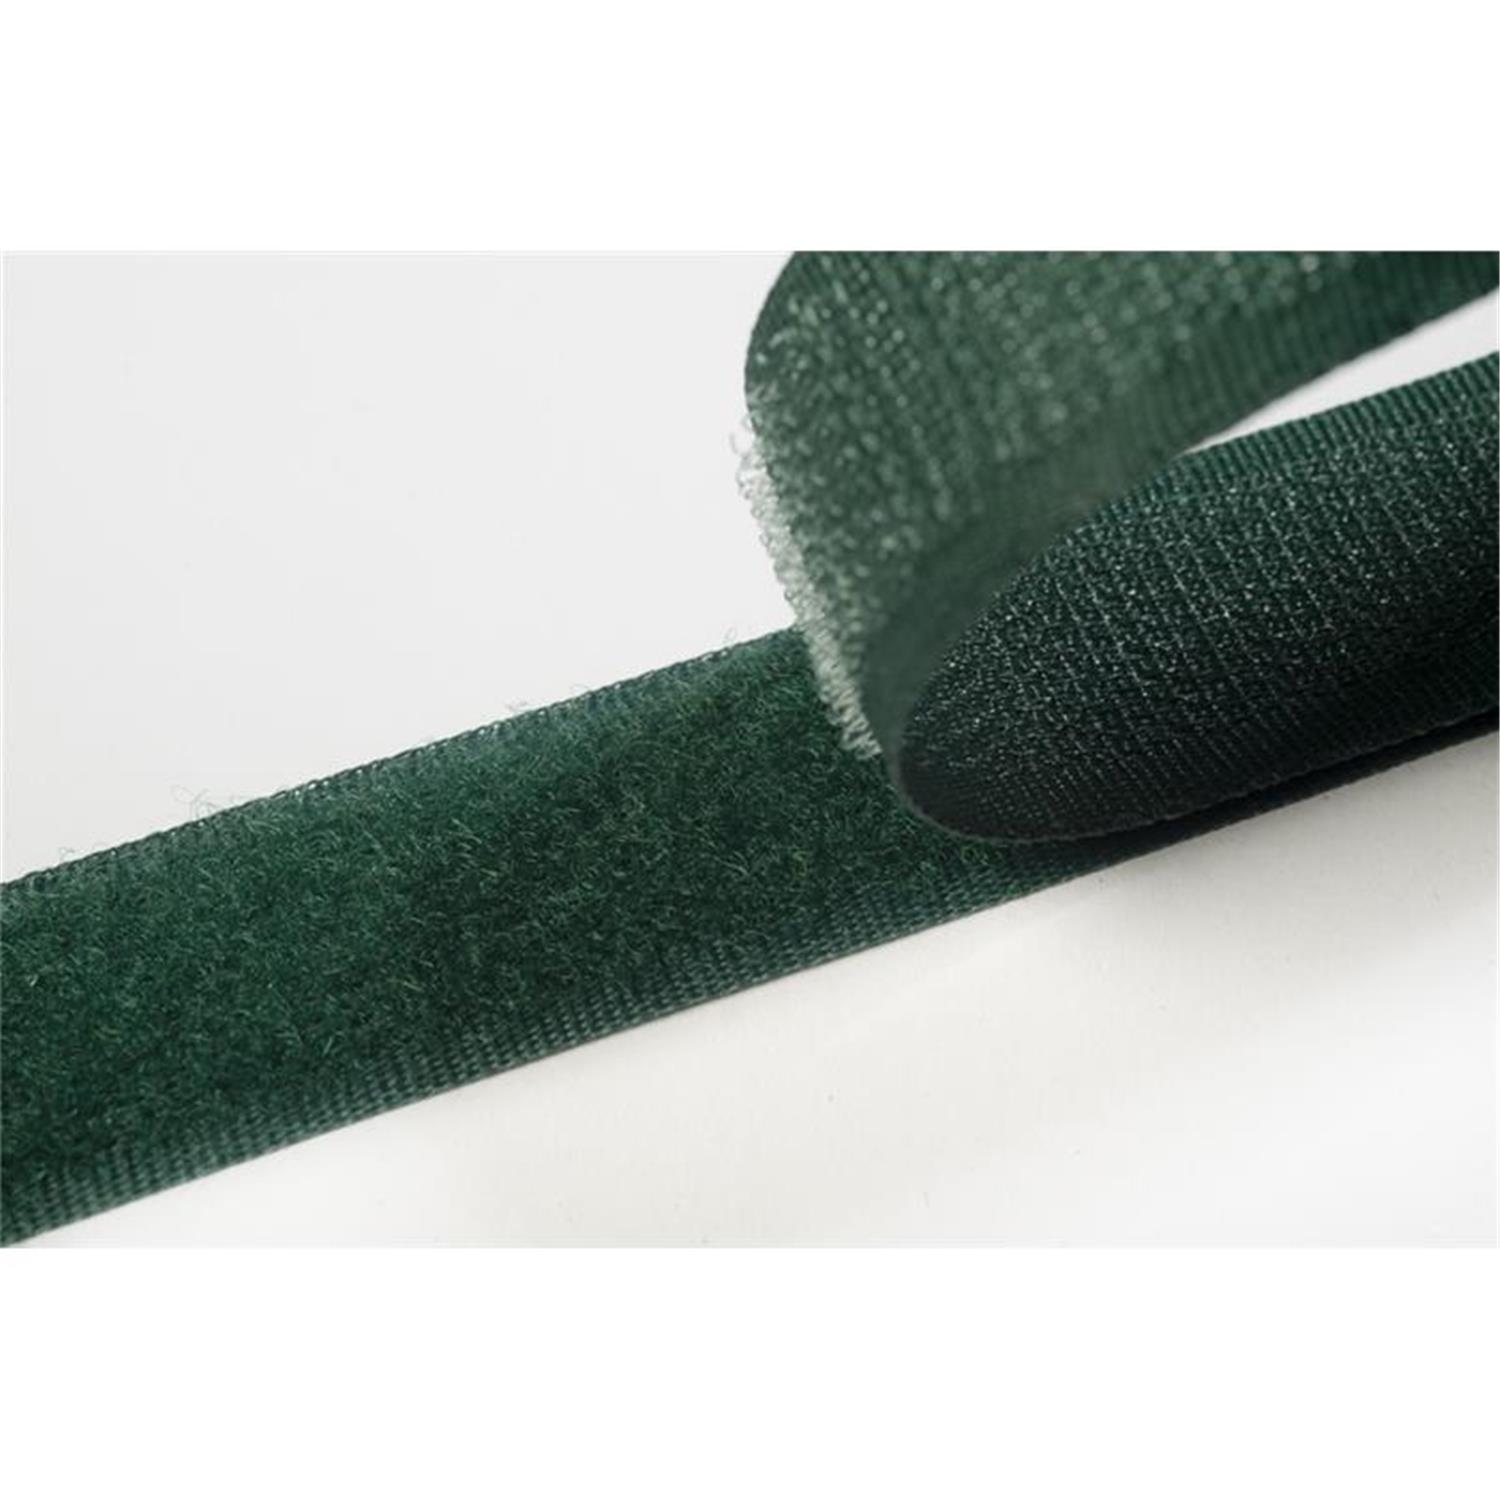 Klettband zum aufnähen, 20 mm, dunkelgrün #31 25 Meter